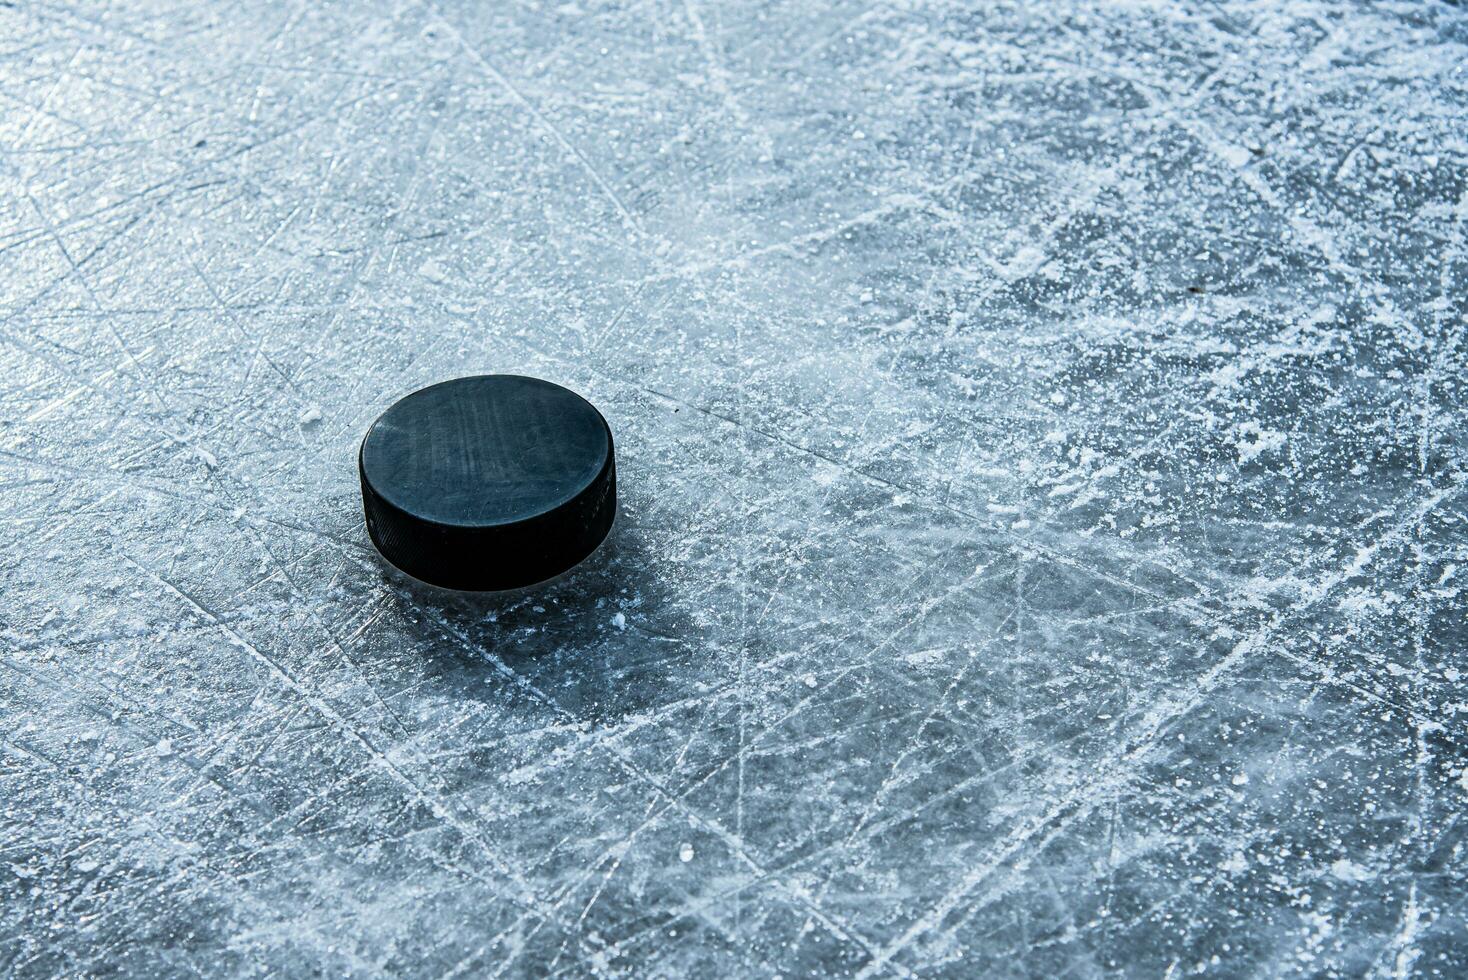 black hockey puck lies on ice at stadium photo